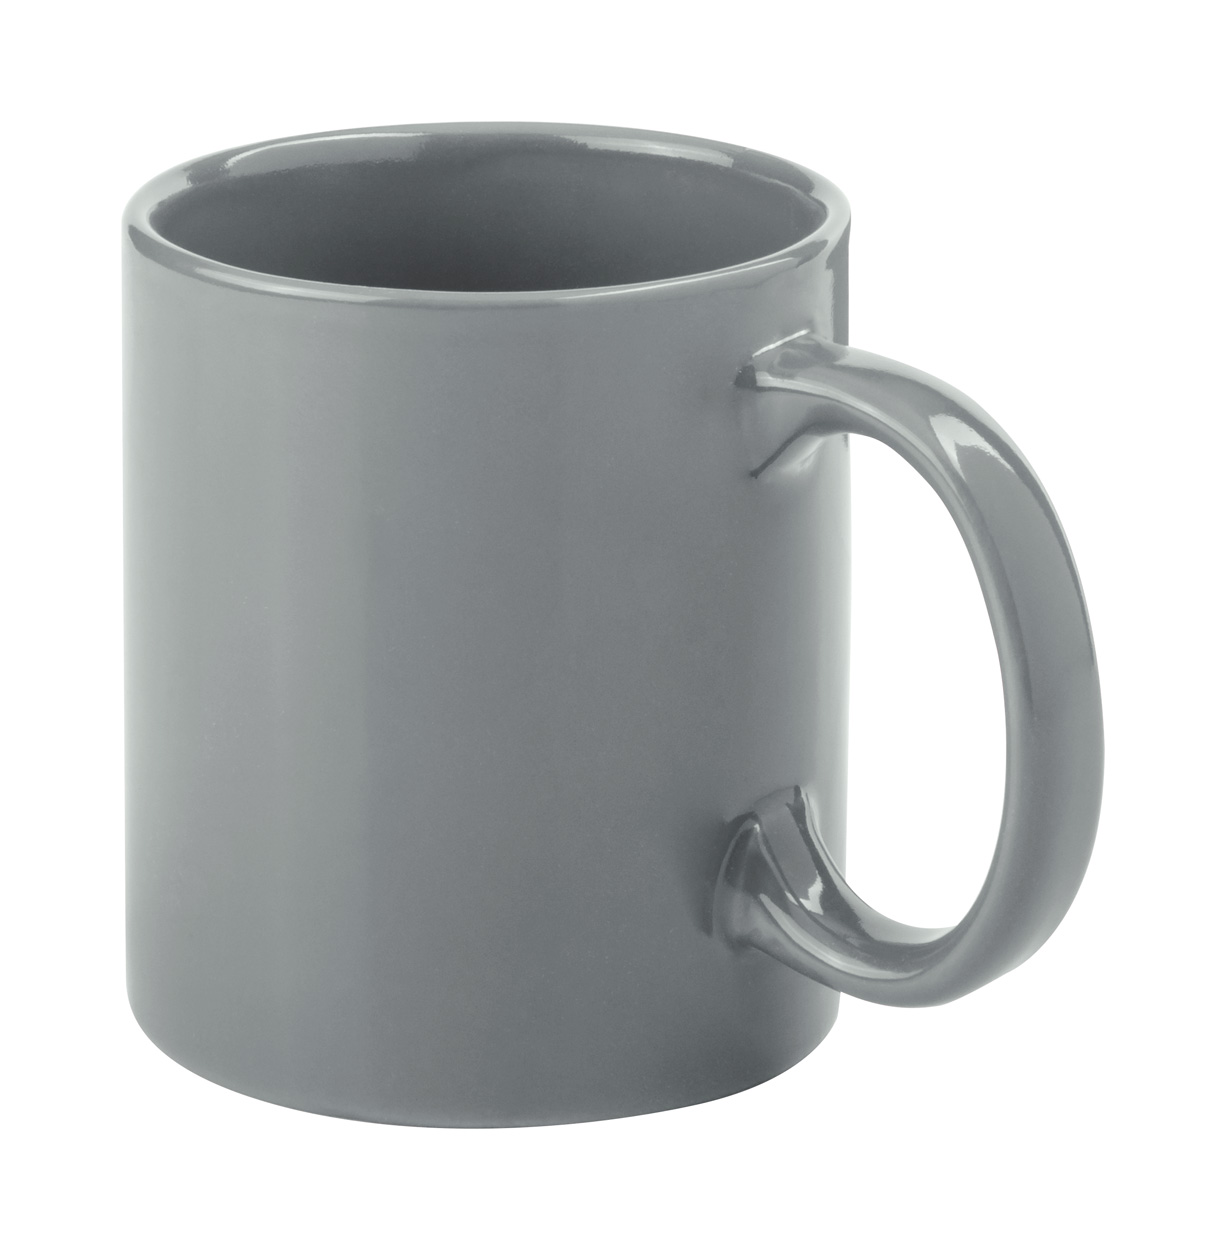 Ziphor mug - grey